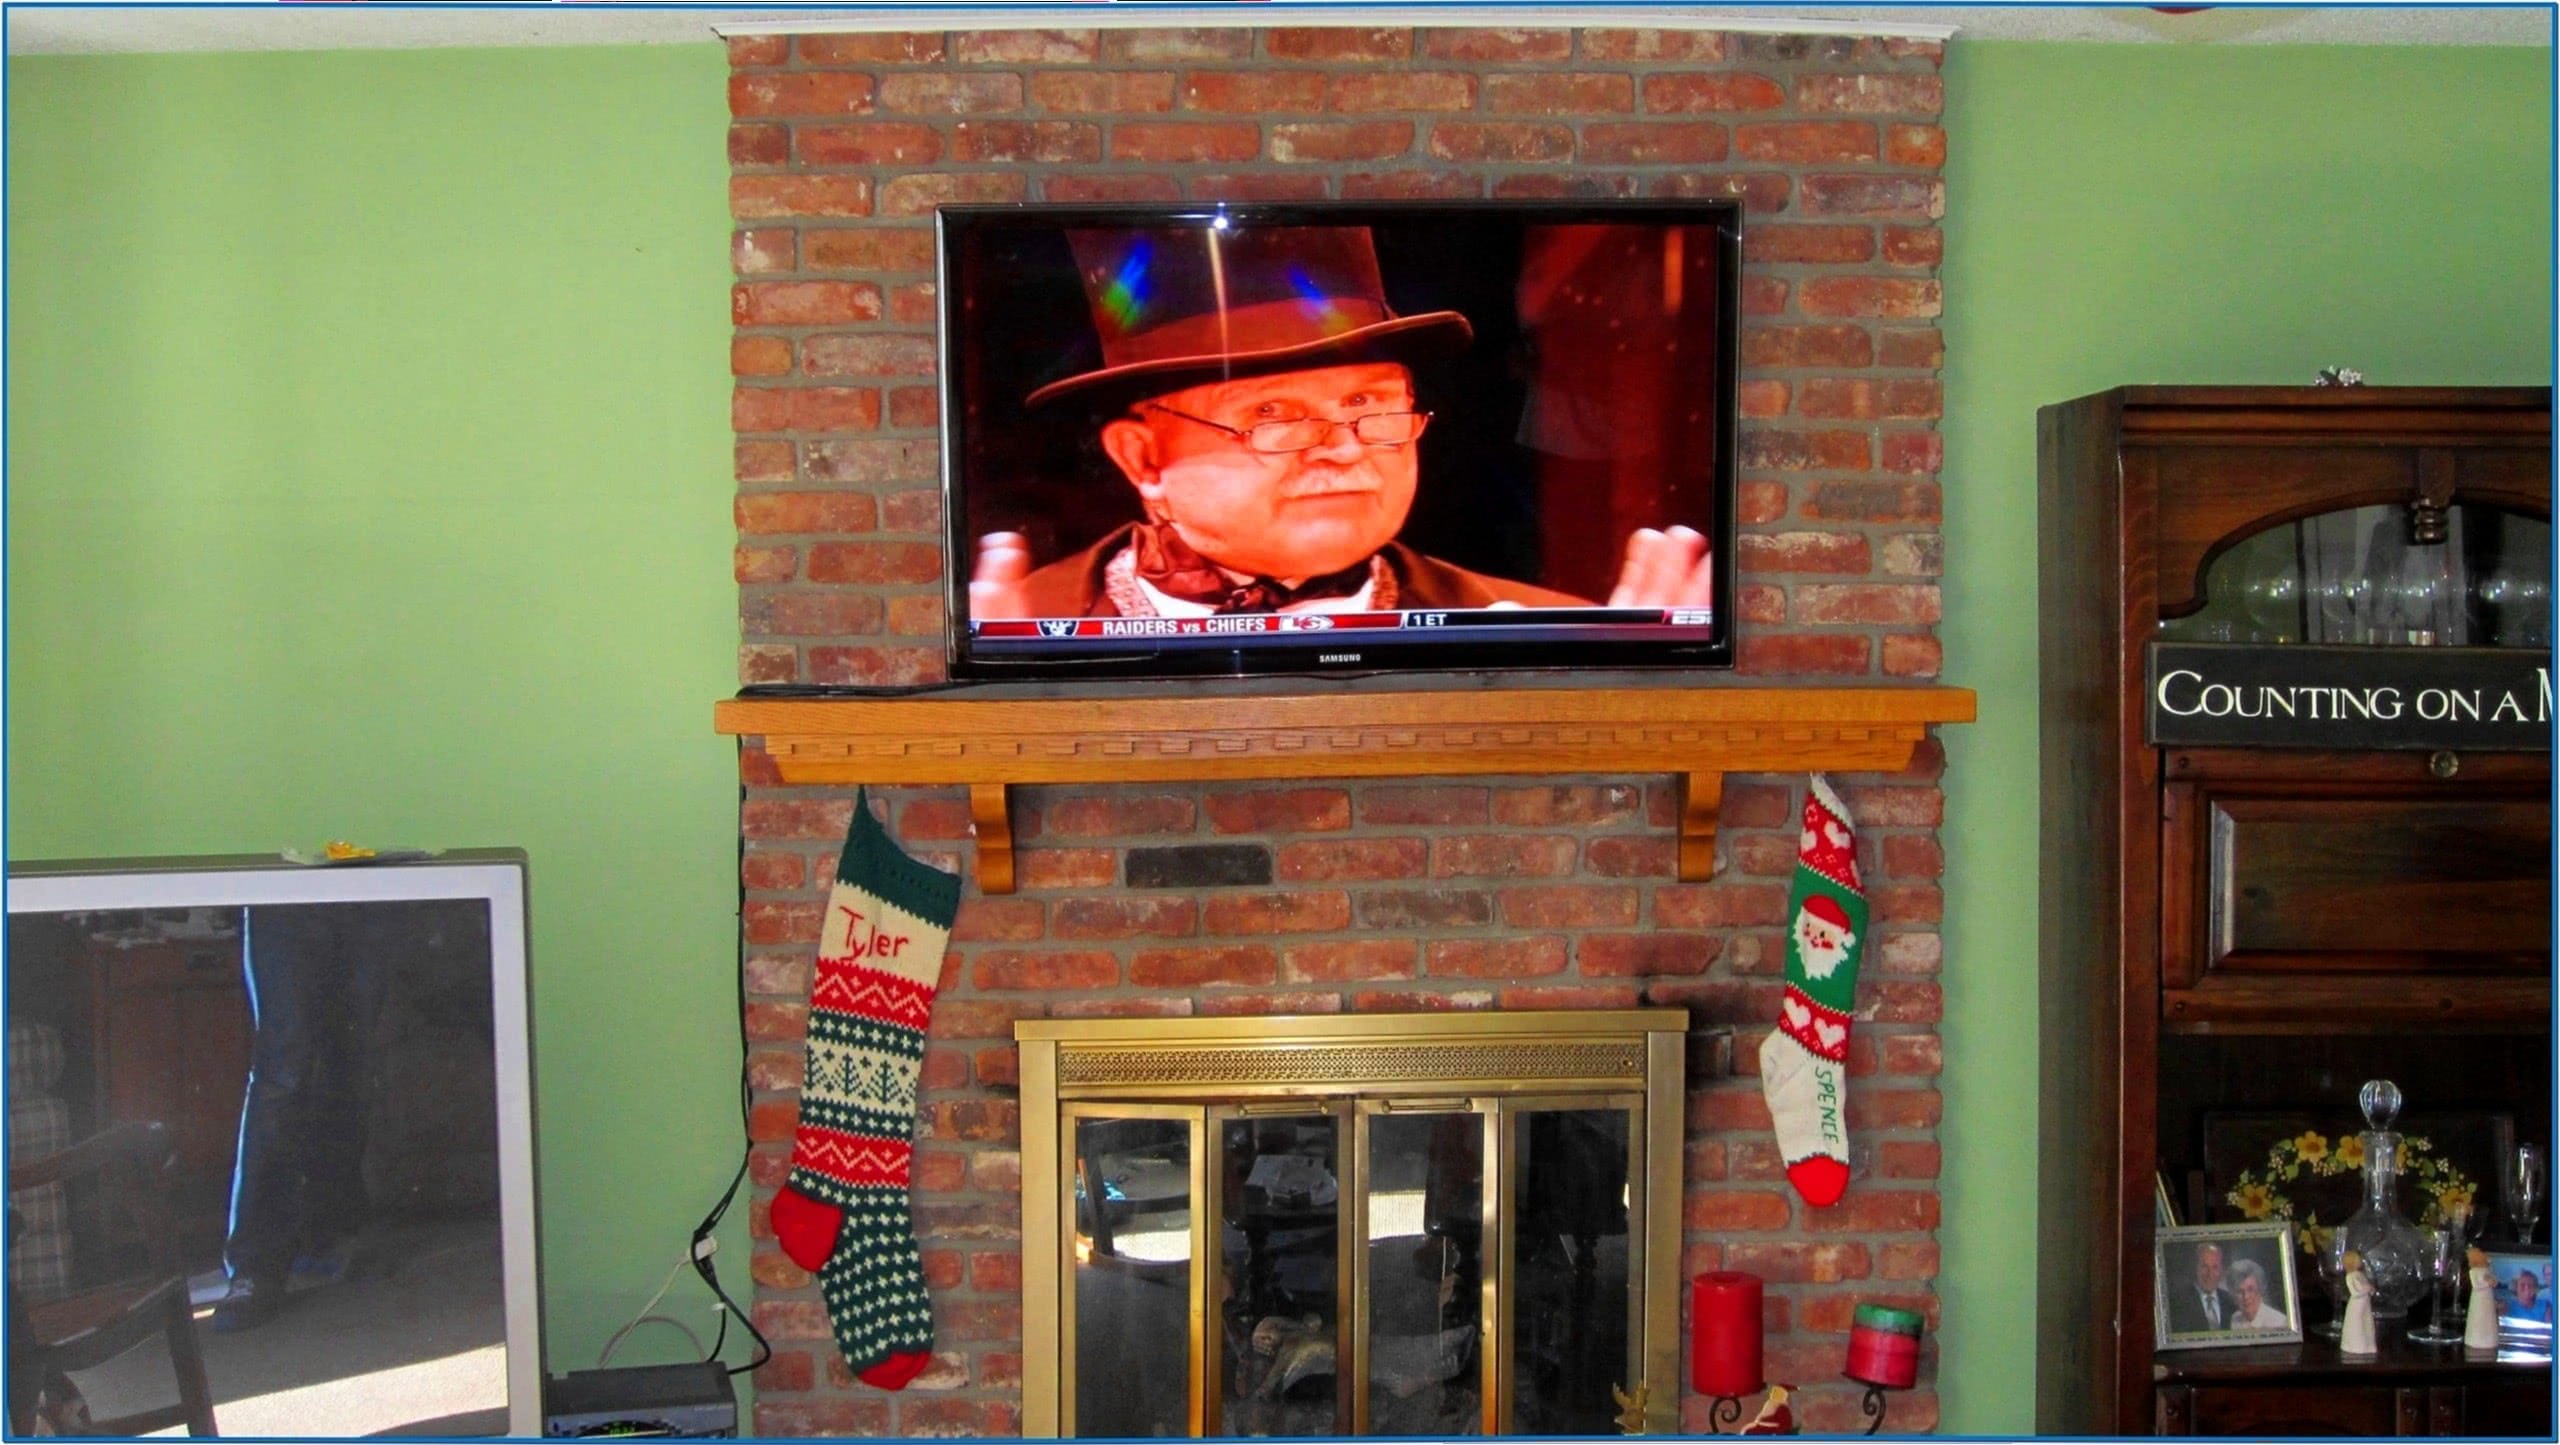 Samsung Led TV Fireplace Screensaver